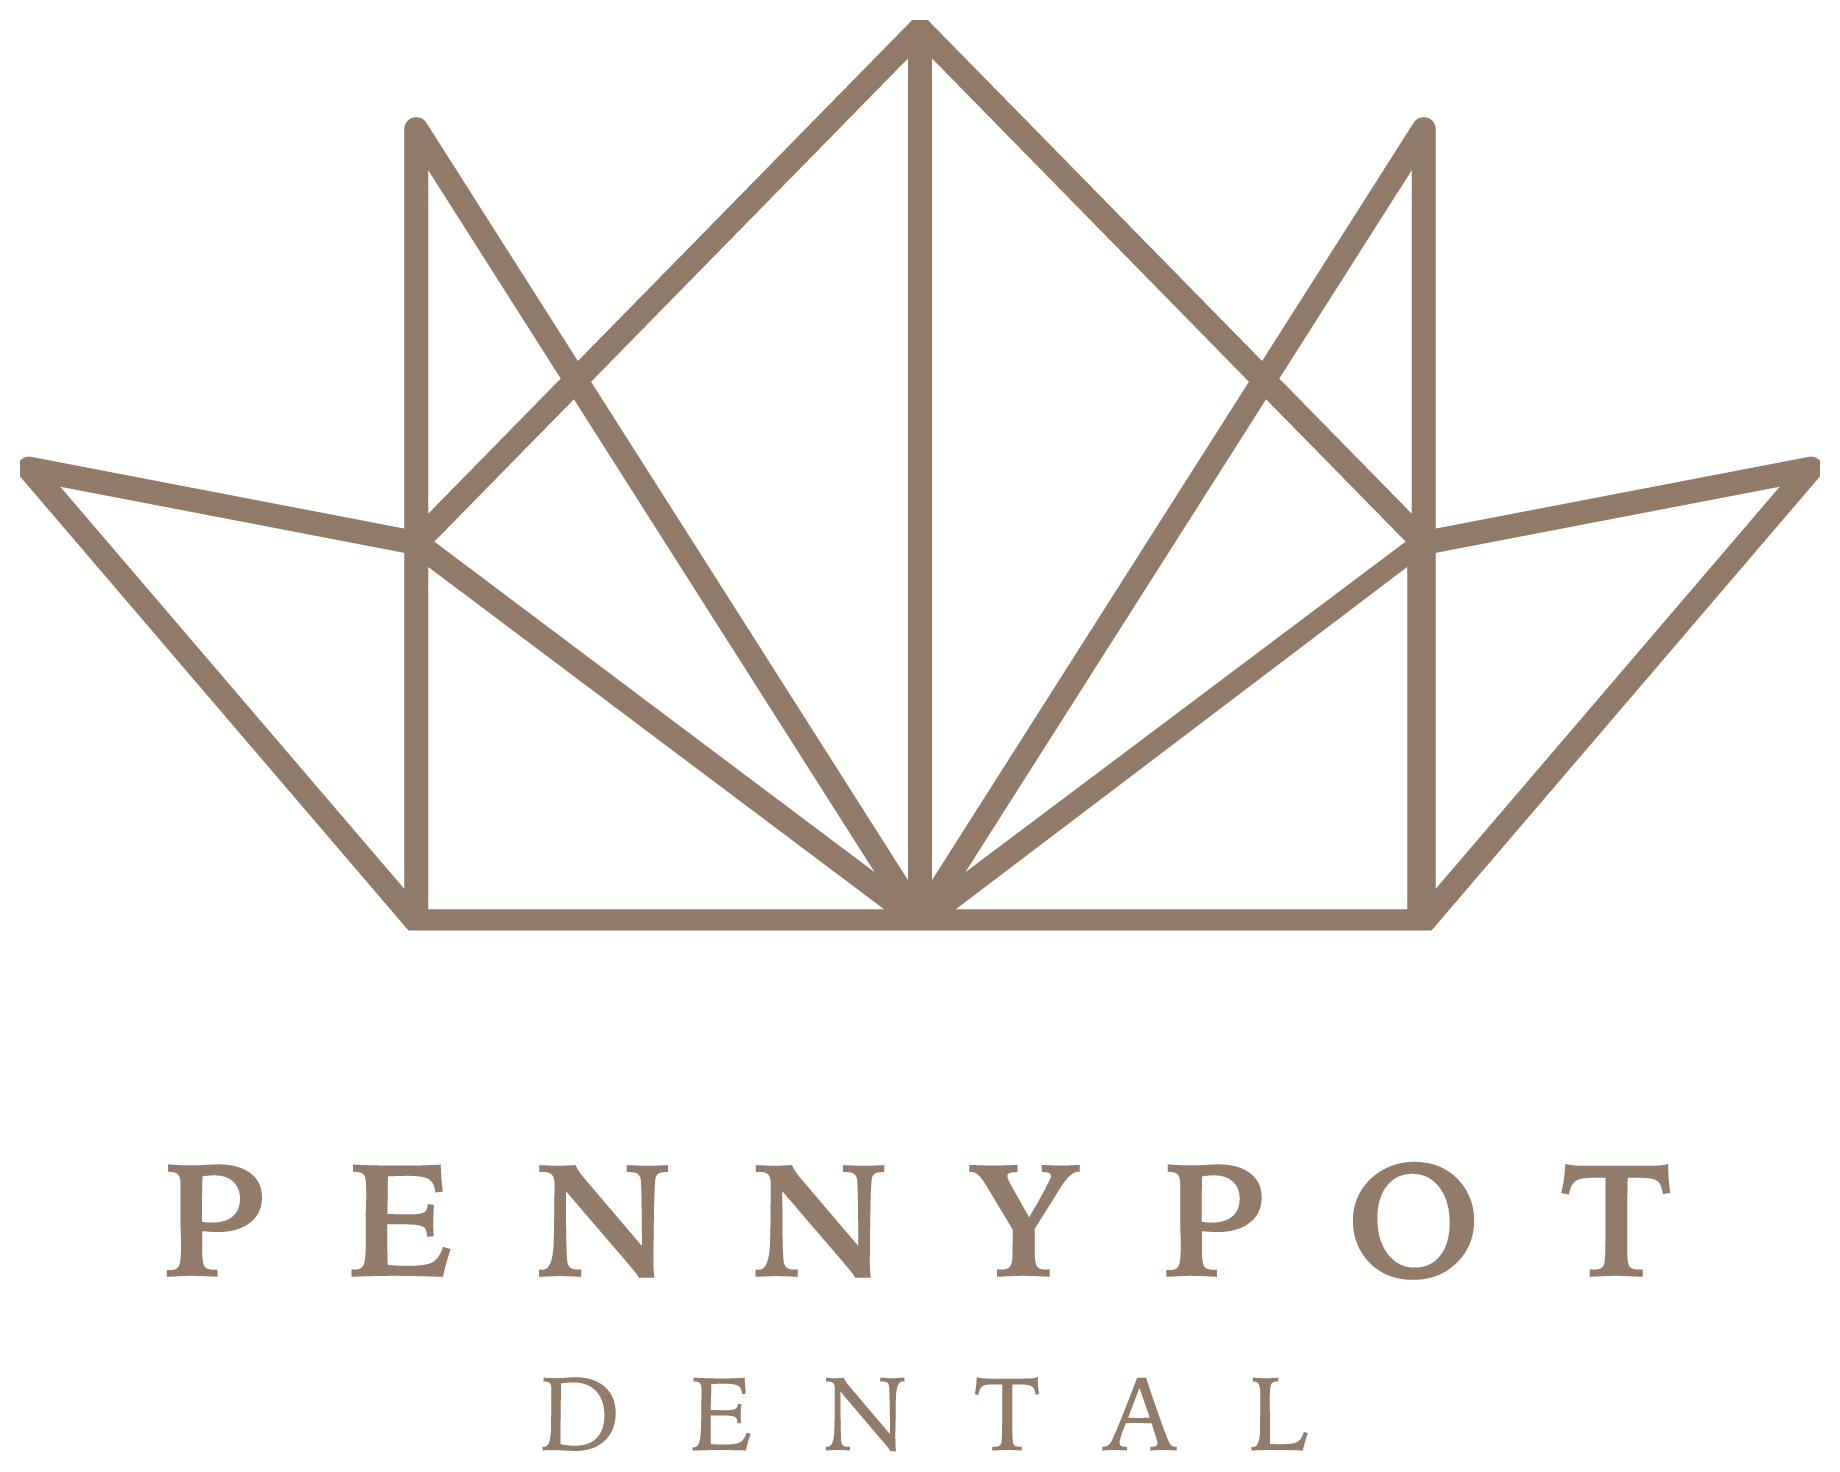 Pennypot Dental